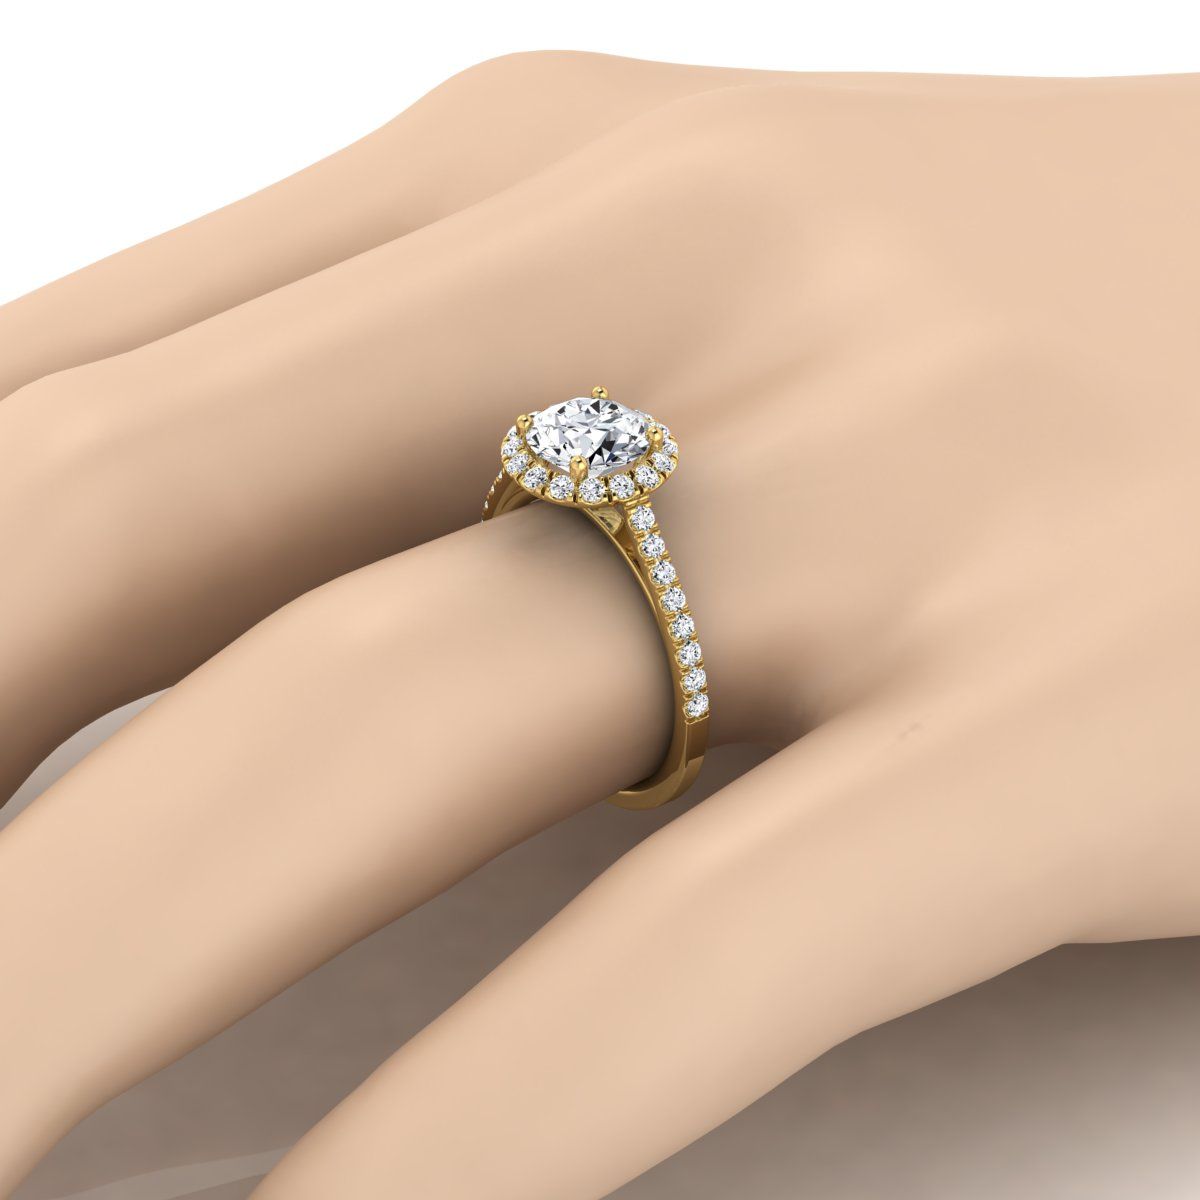 18K Yellow Gold Round Brilliant Aquamarine Petite Halo French Diamond Pave Engagement Ring -3/8ctw